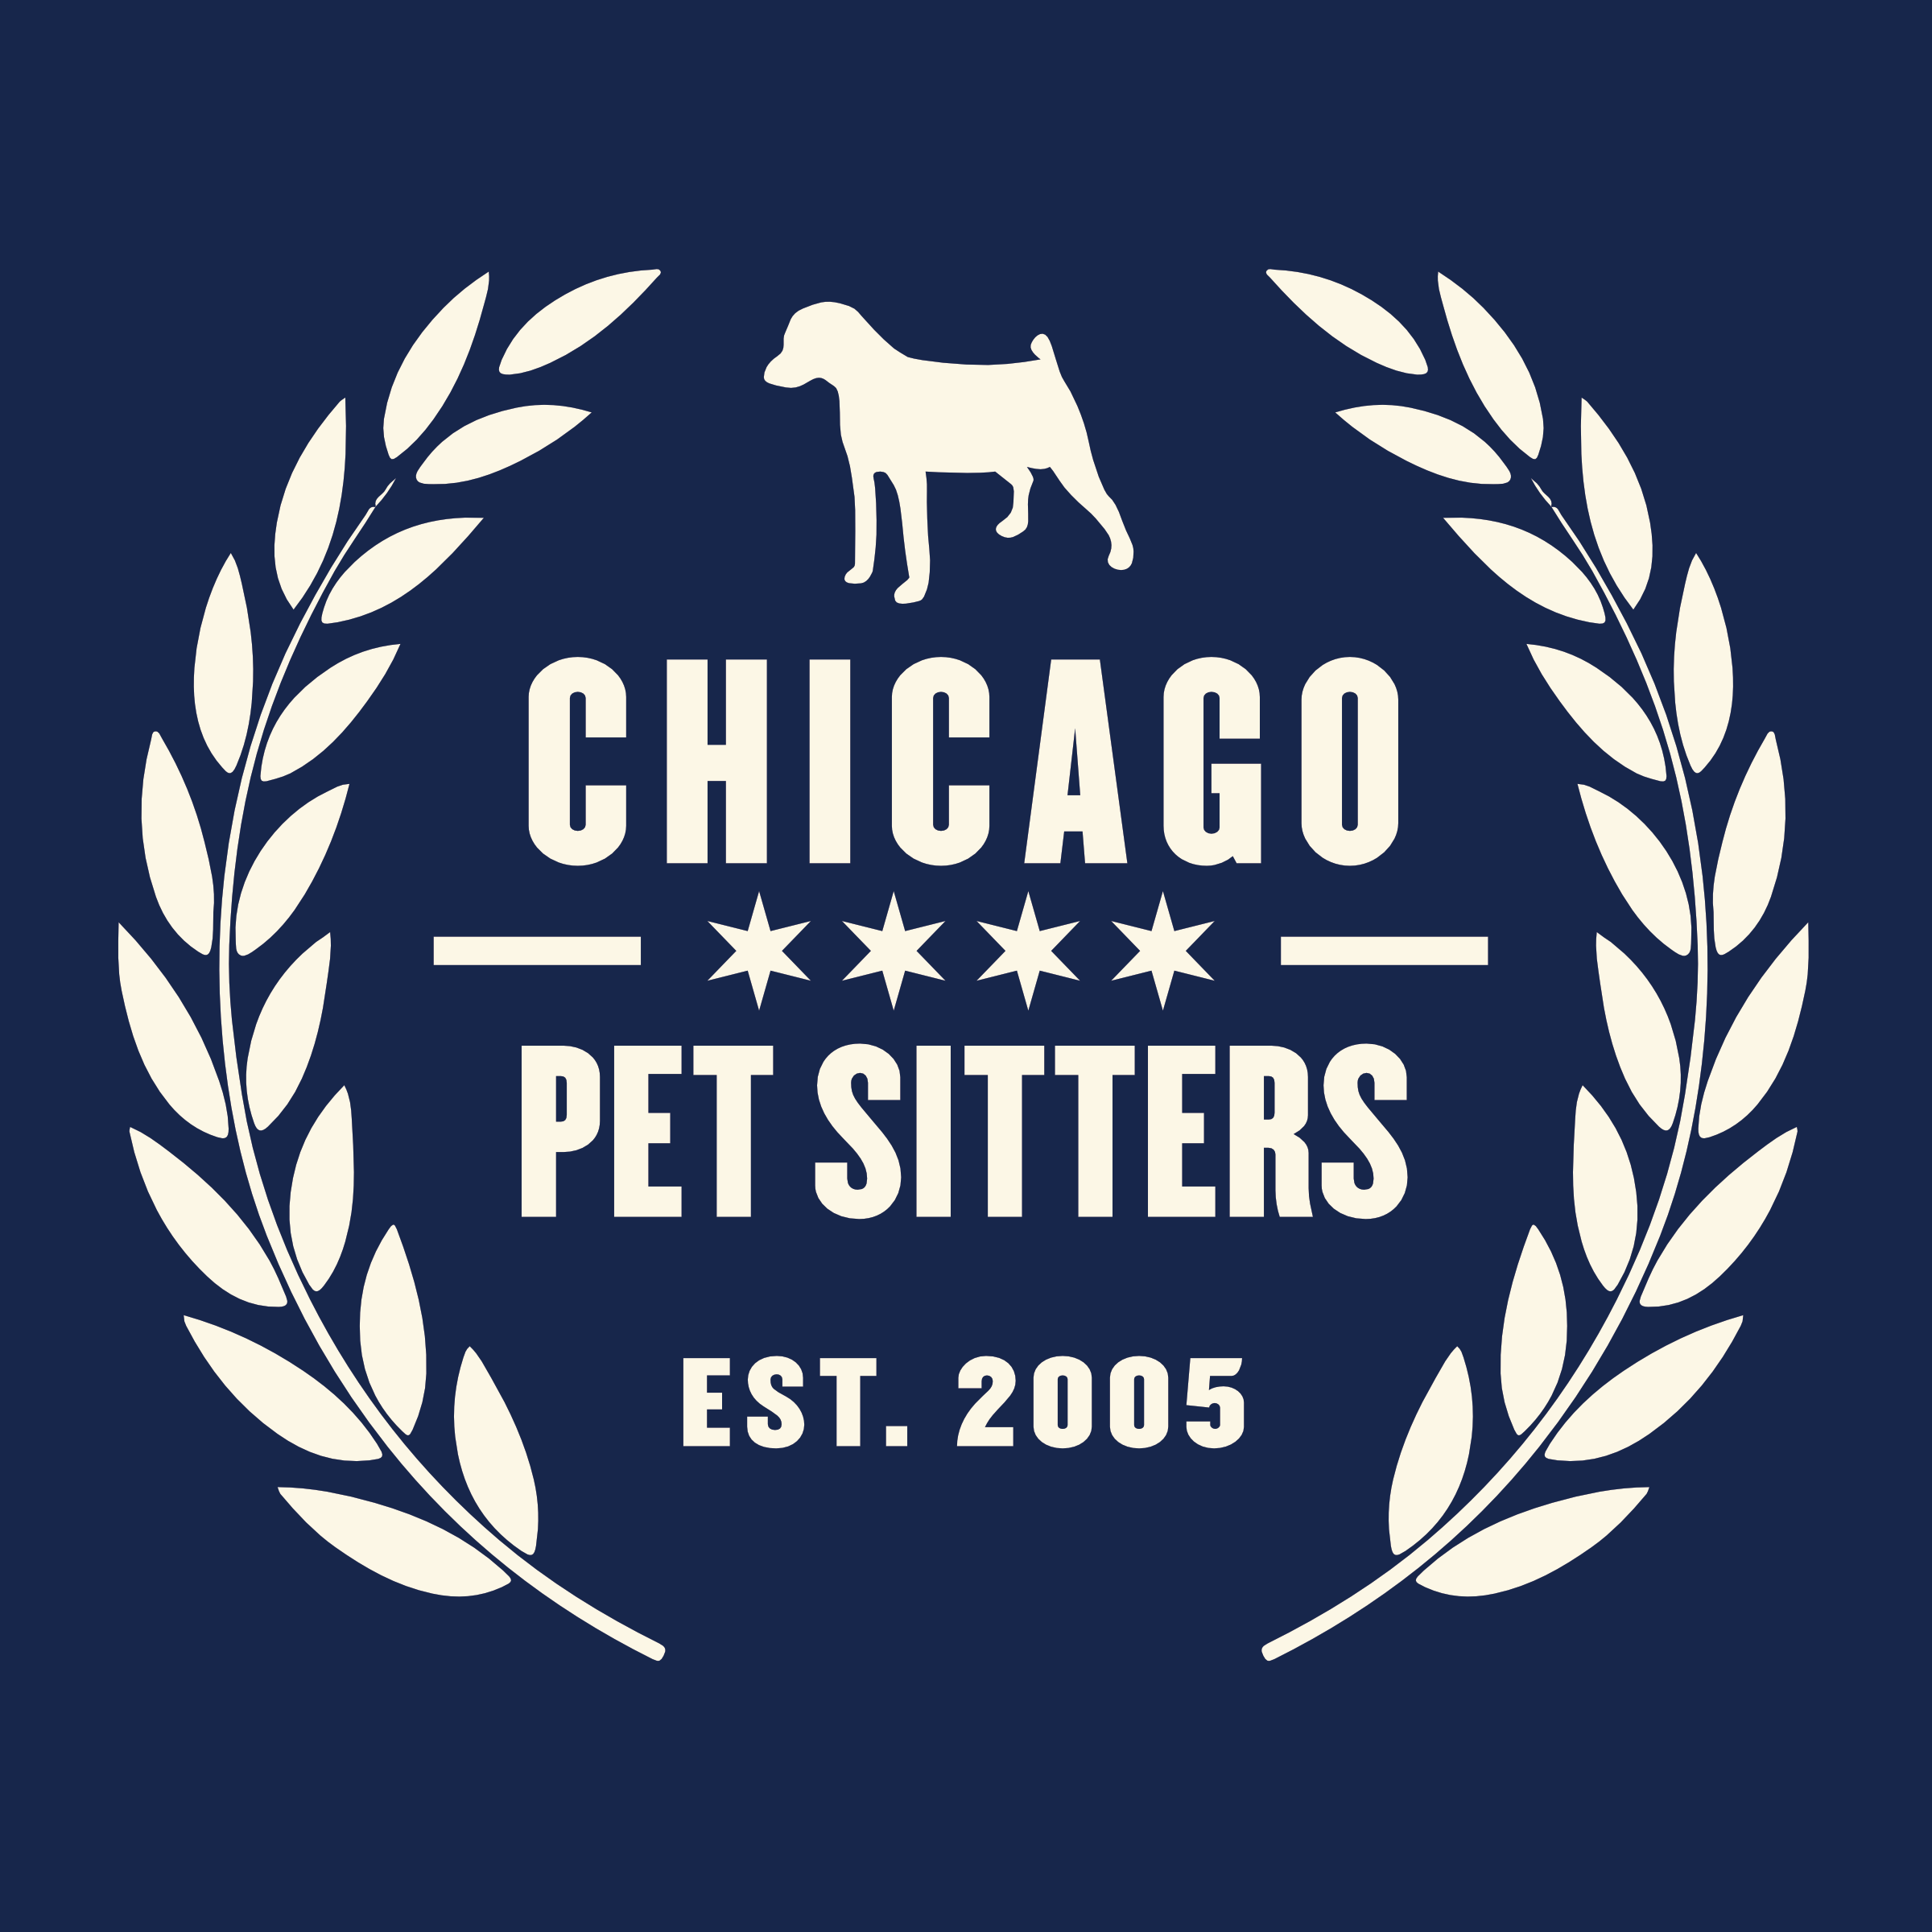  Chicago Pet Sitters- Chicago, IL   https://chicagopetsitters.com/  